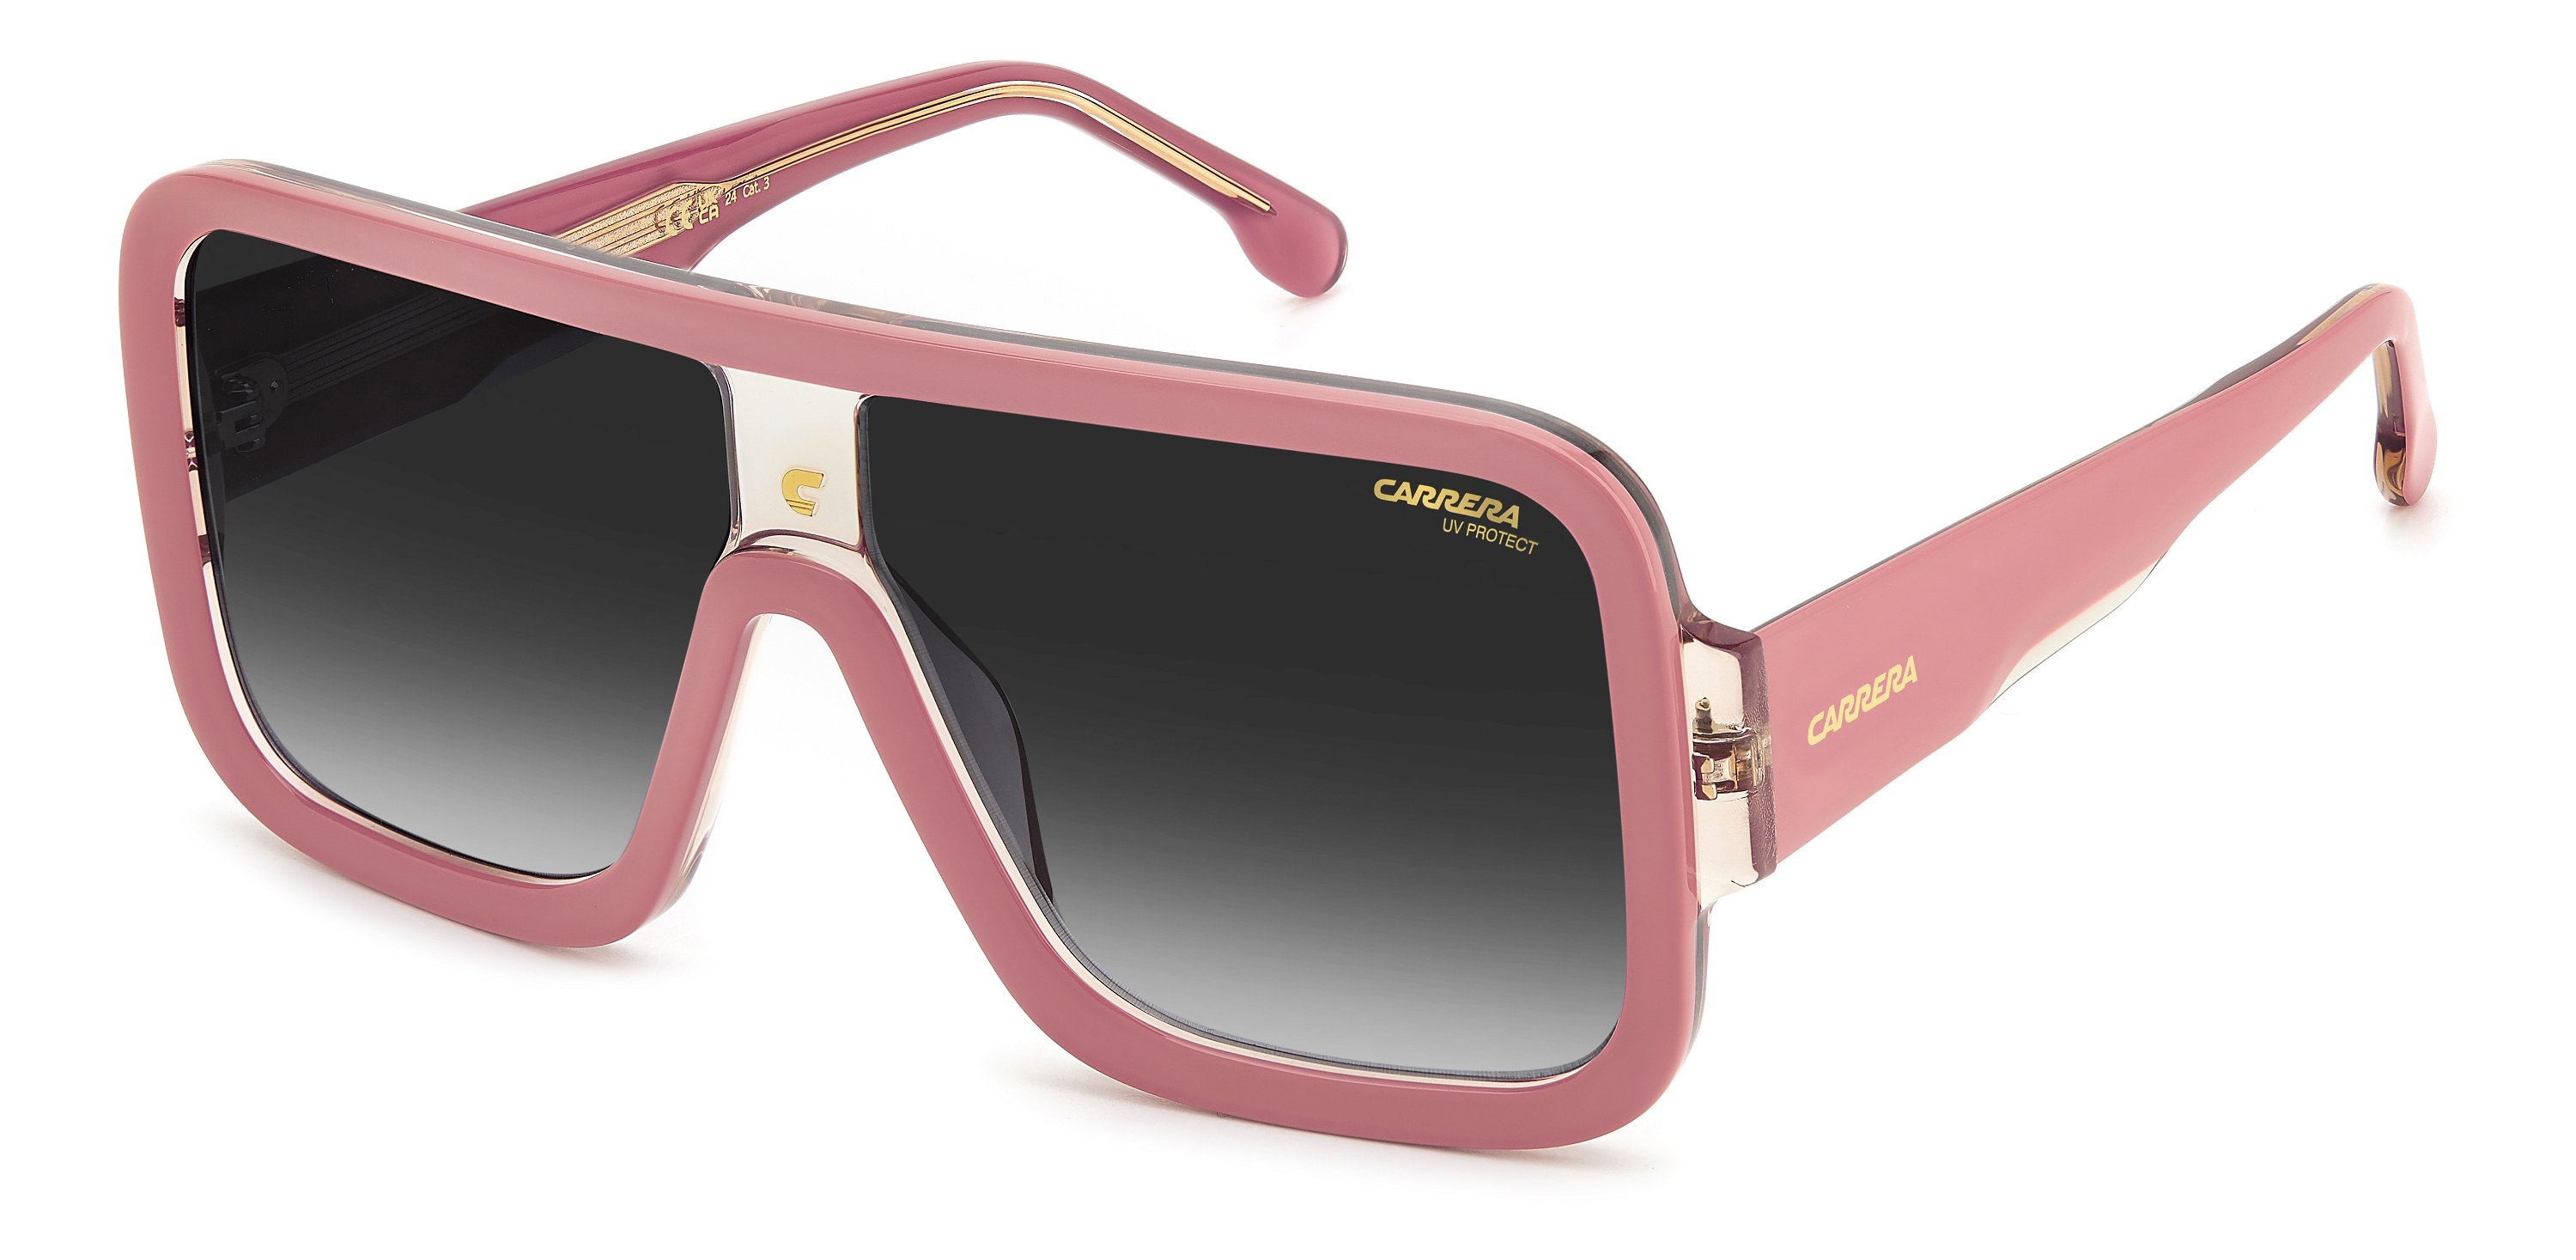 Carrera Sonnenbrille FLAGLAB 14 3R7 rosa beige